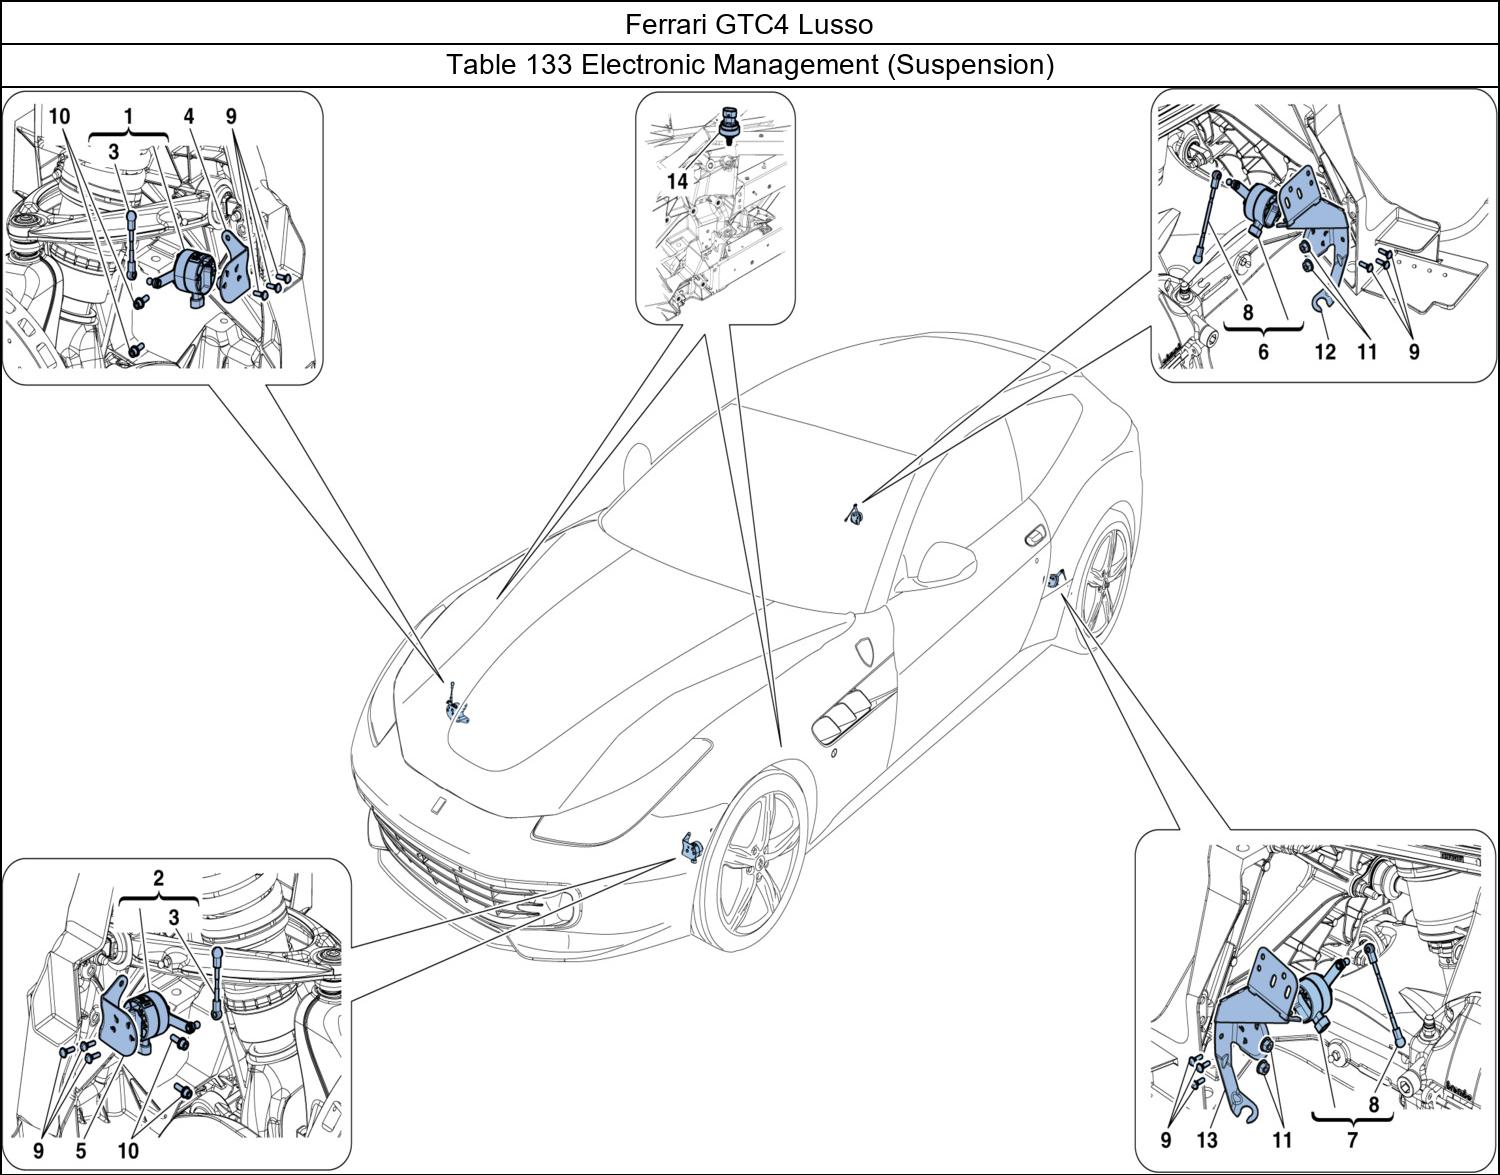 Ferrari Parts Ferrari GTC4 Lusso Table 133 Electronic Management (Suspension)